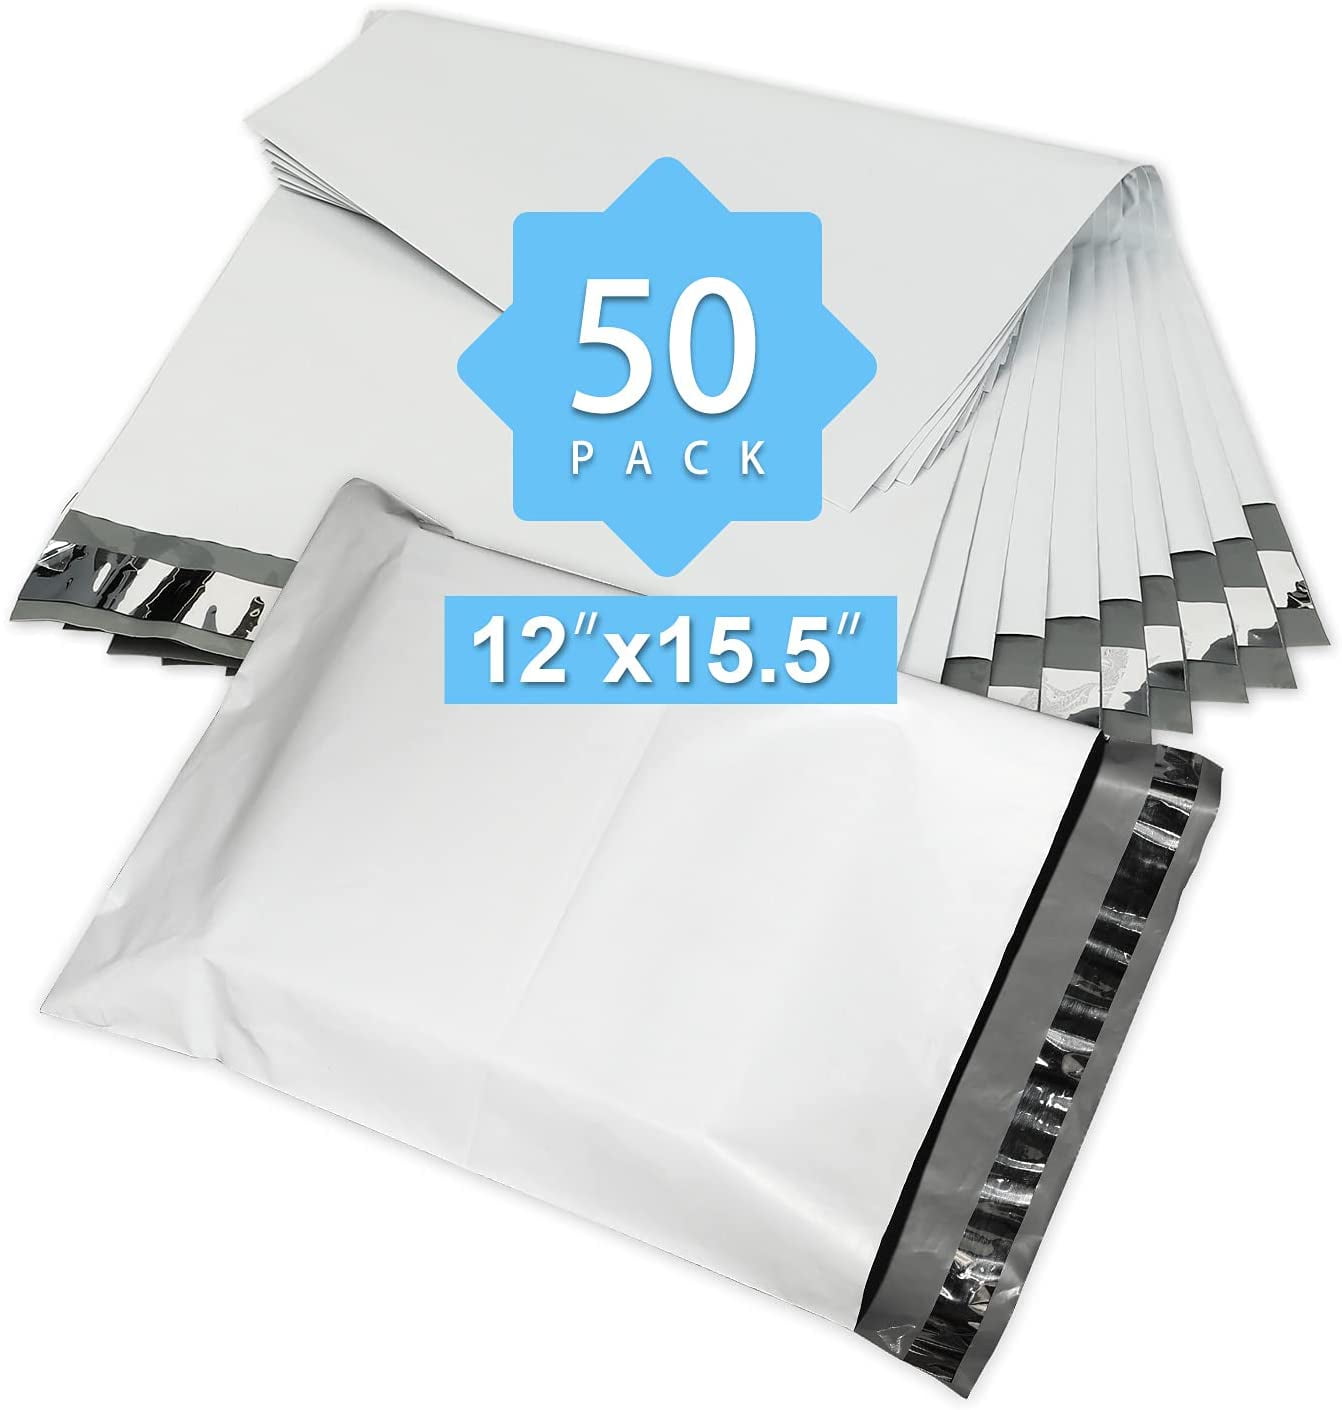 Yens® 100 #M5 WHITE POLY MAILERS ENVELOPES Self Sealing BAGS 12 x 15.5  100M5 